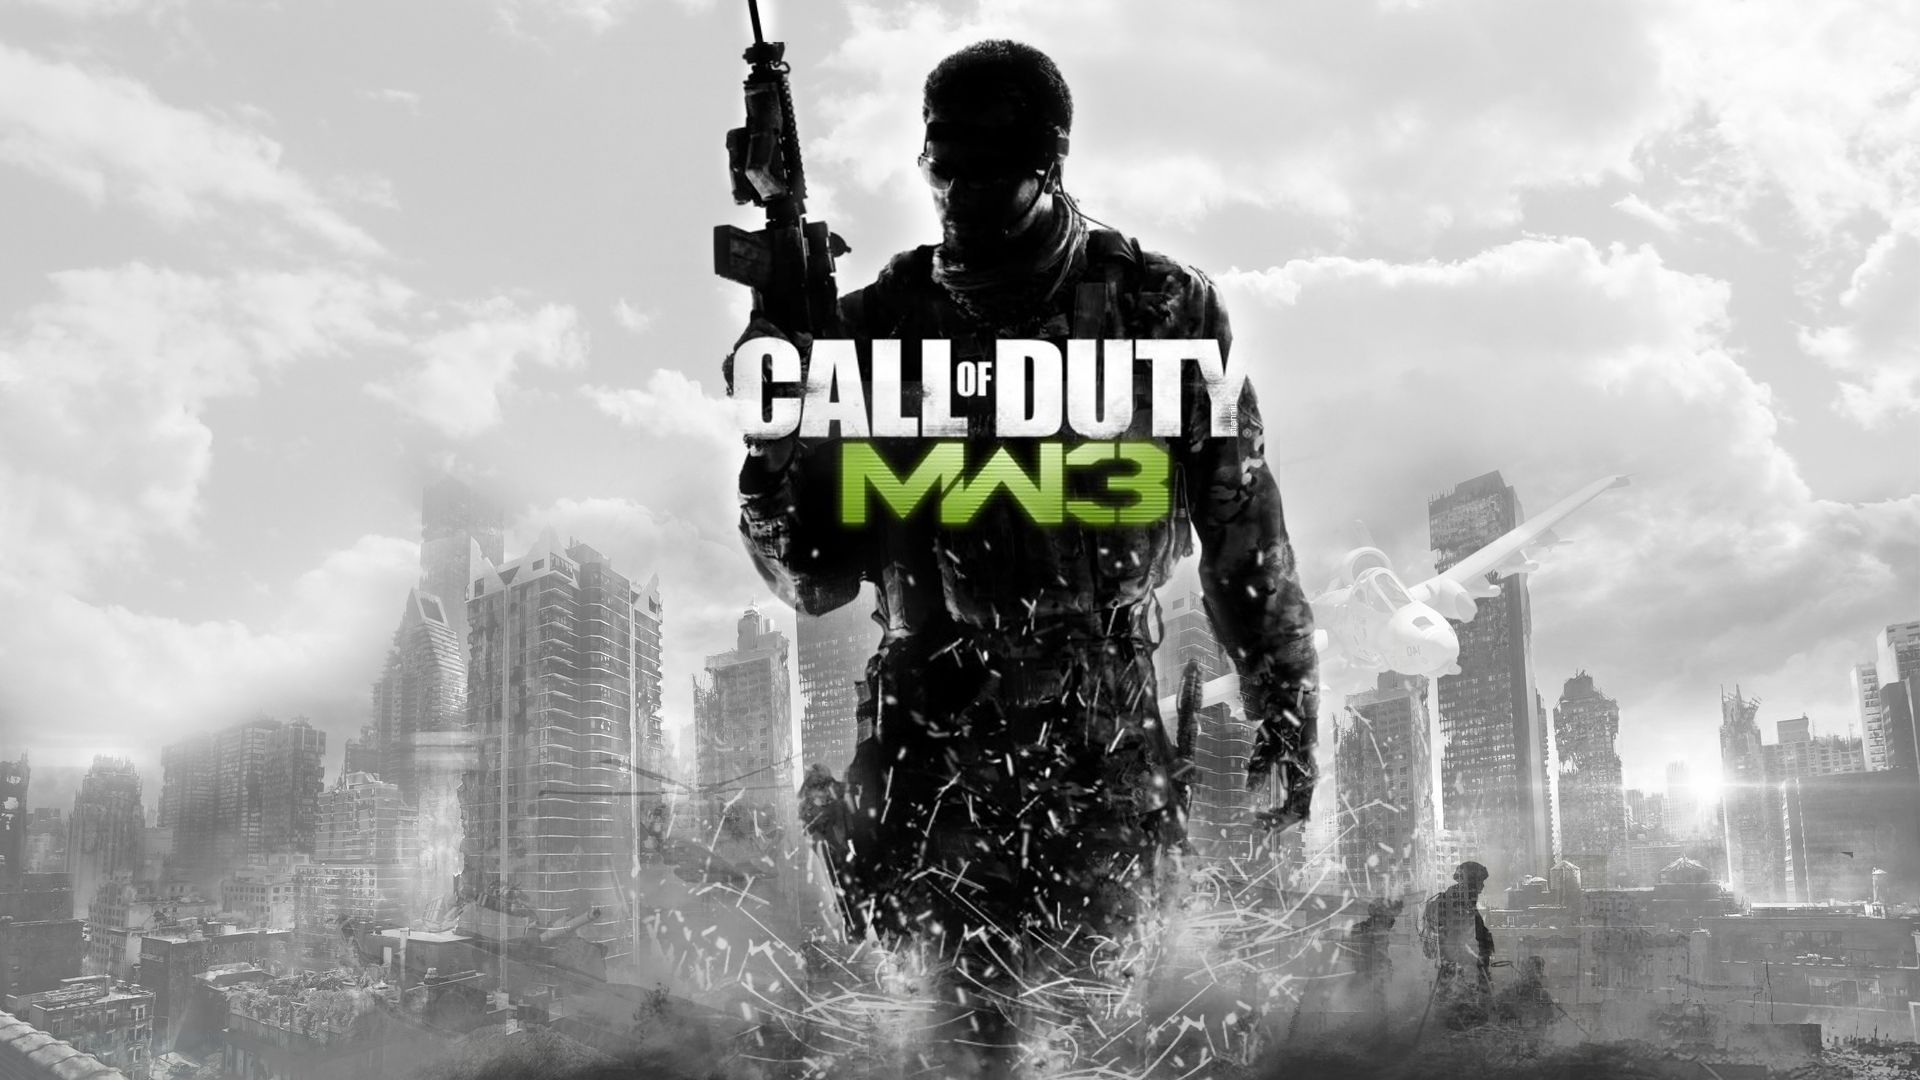 Personal Gaming Modern Warfare 3 Multiplayer Trailer